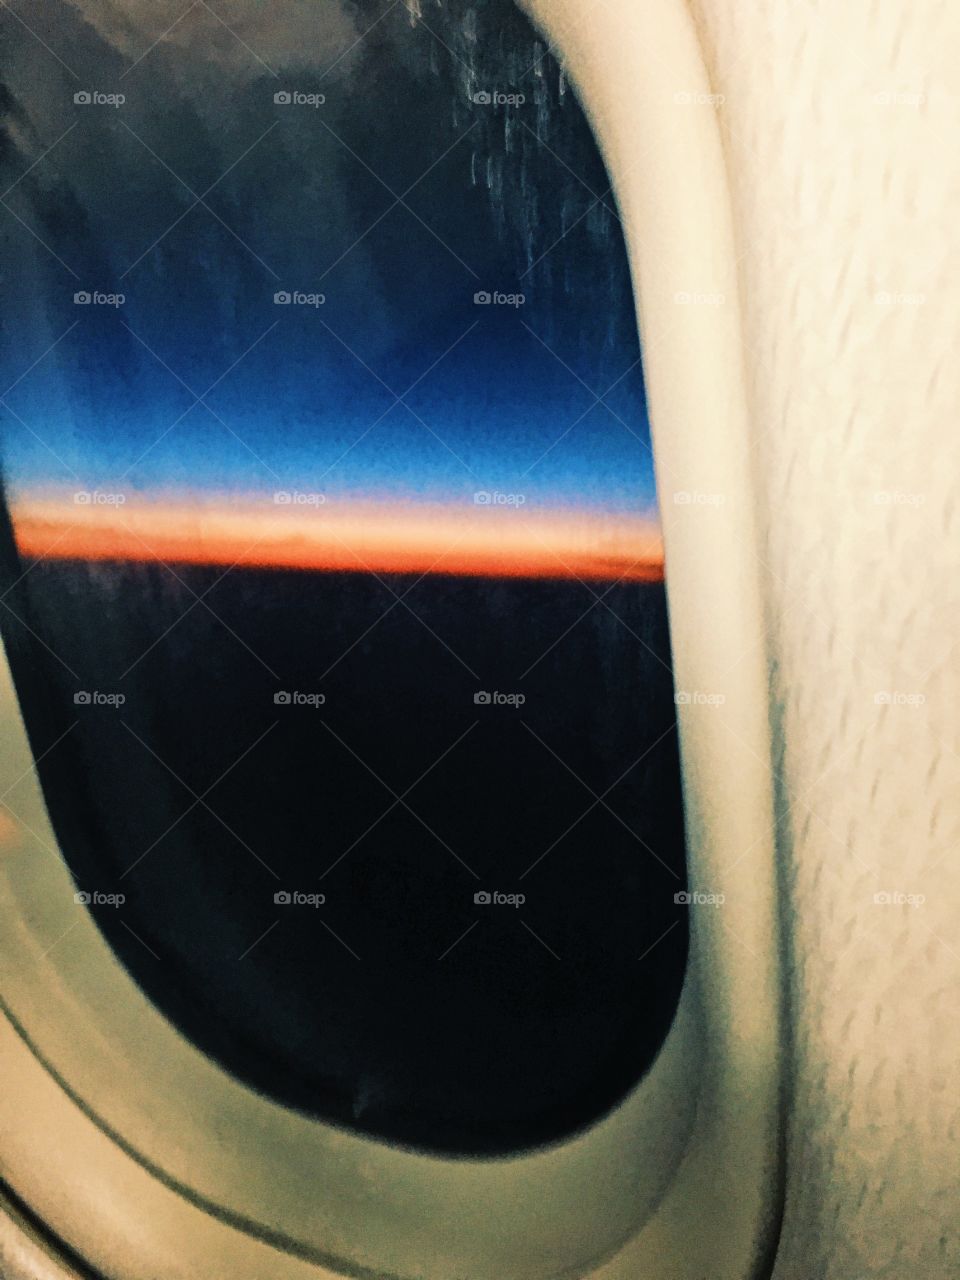 Airplane sky sunrise 